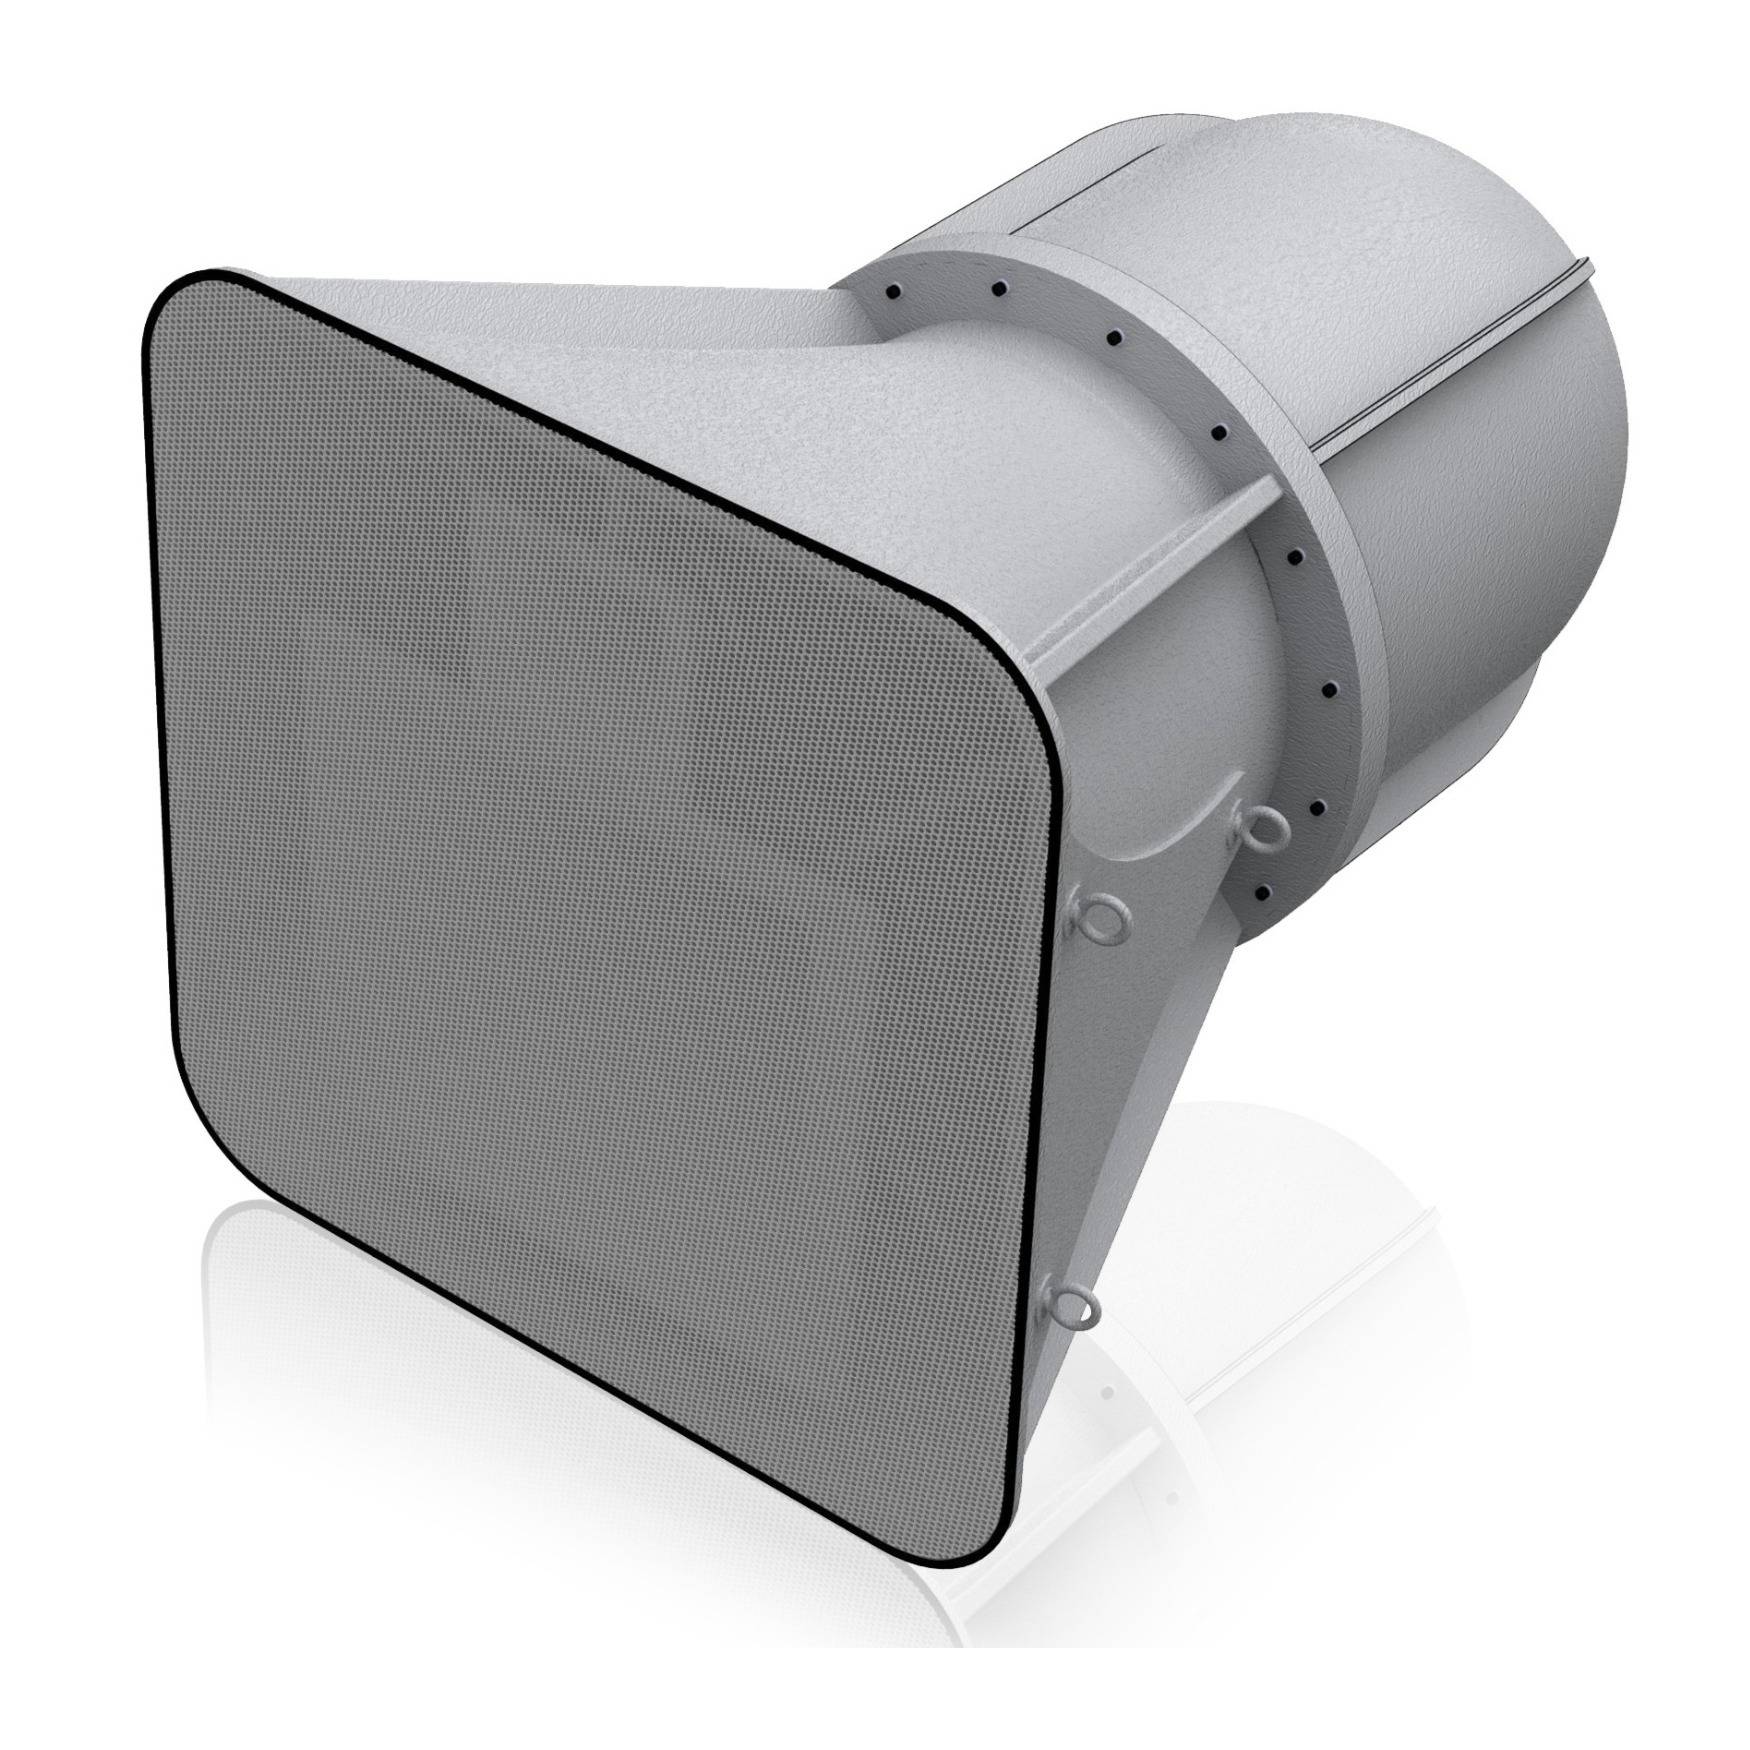 AtlasIED AH42-212 3-Way Stadium Horn Speaker with 40x20-Degree Coverage Pattern (Gray)